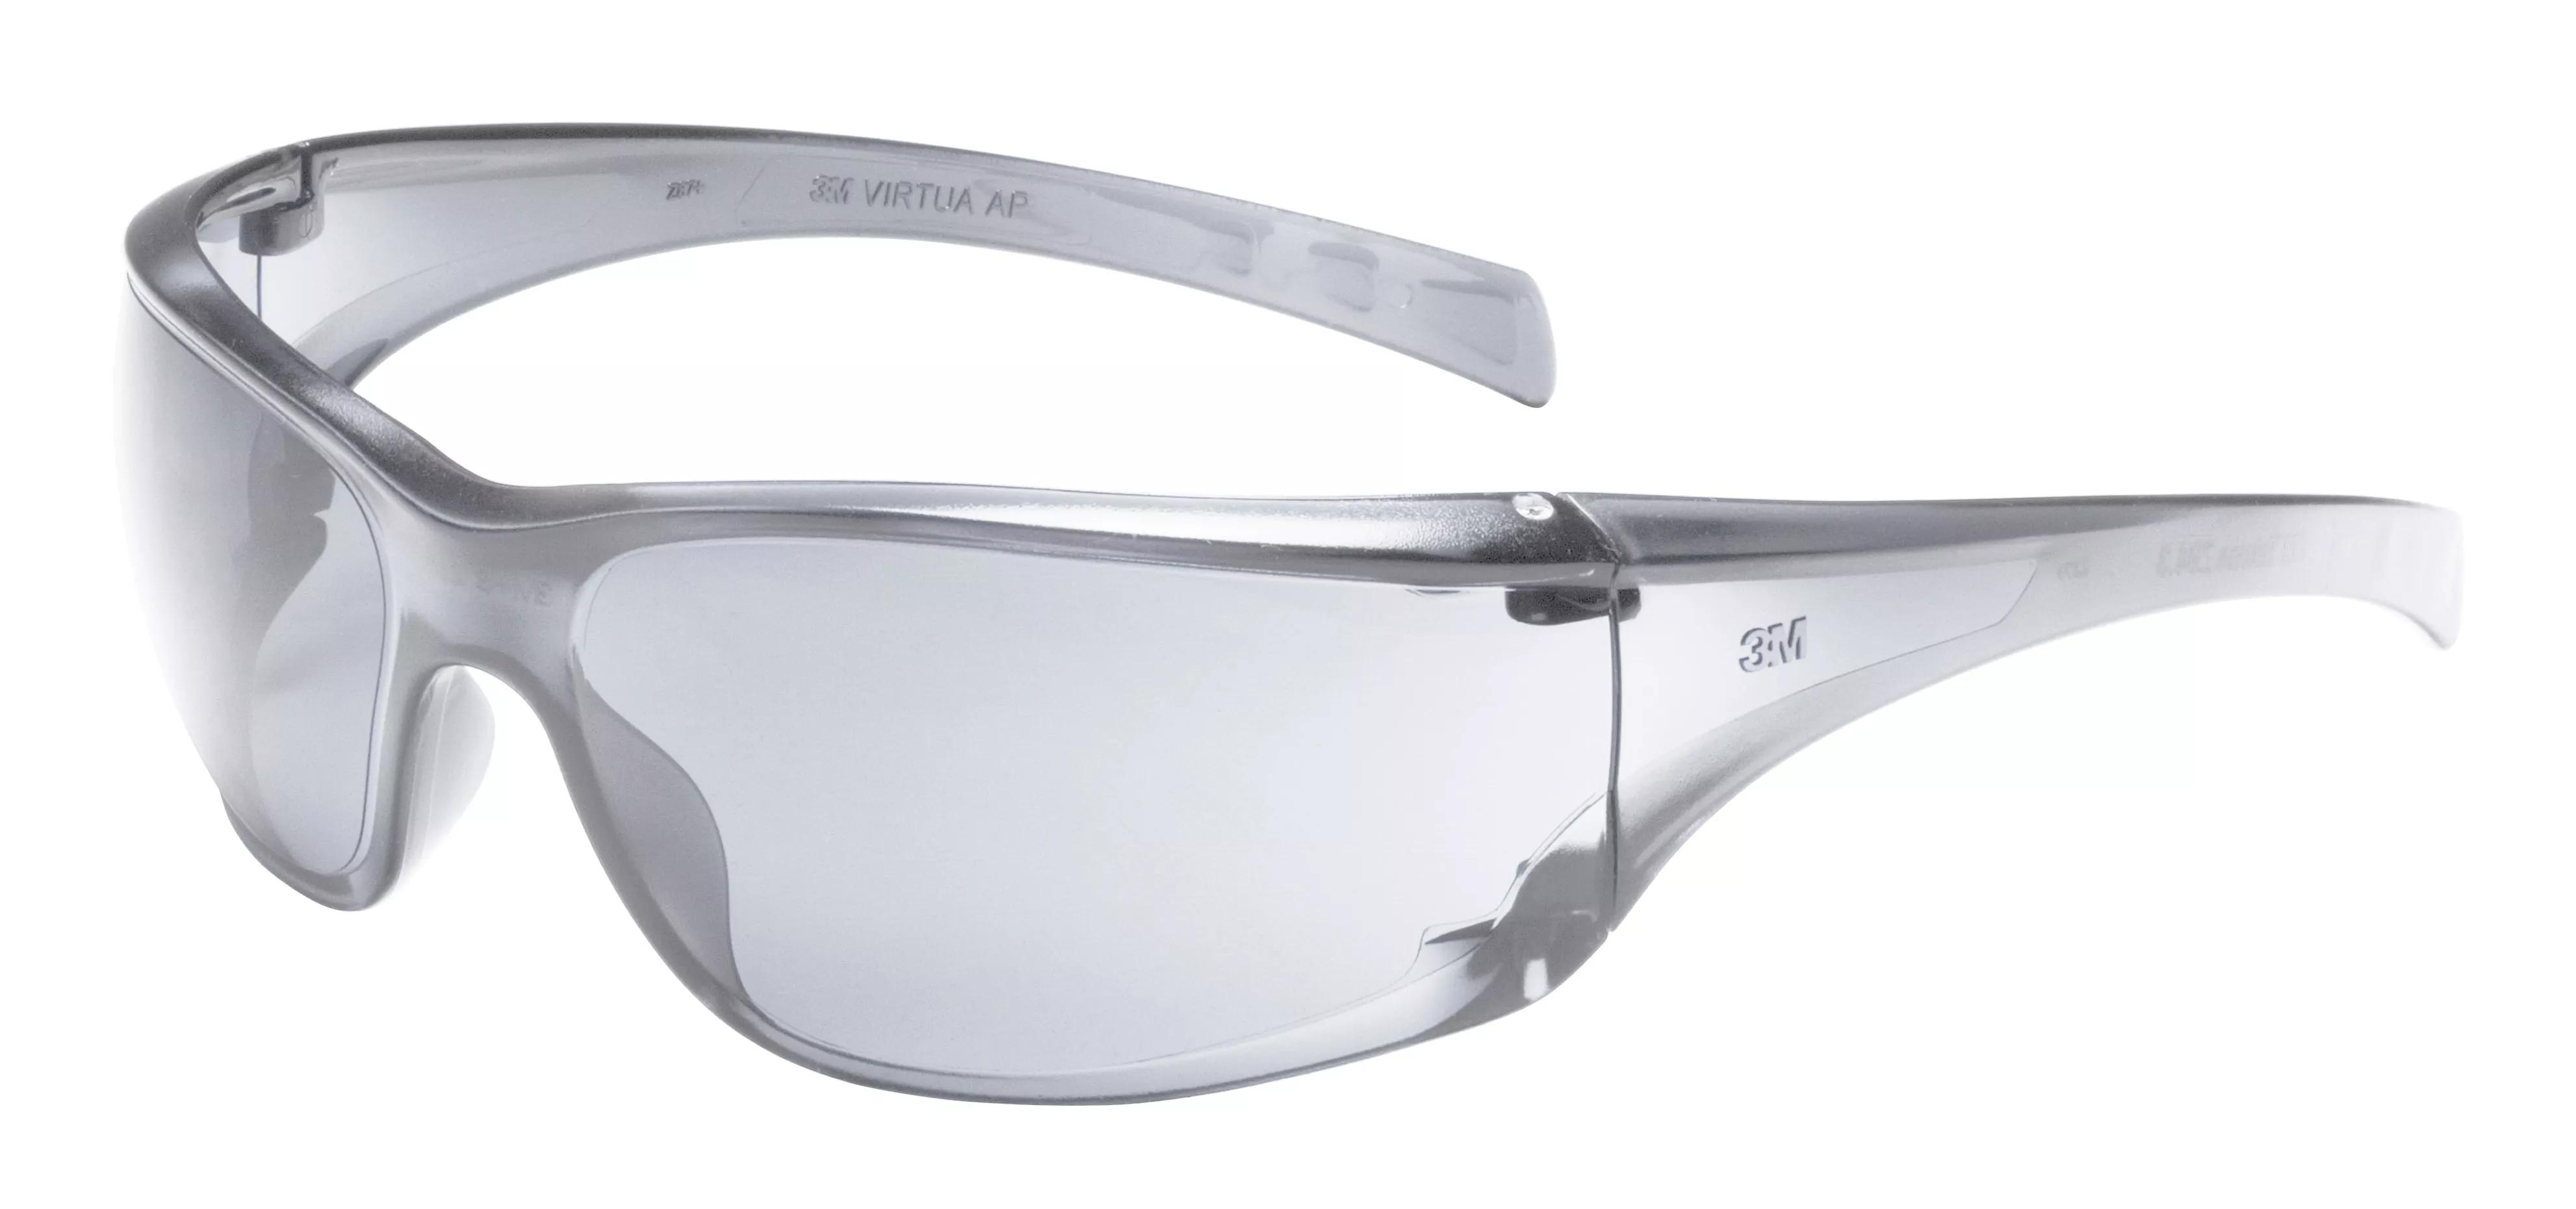 3M™ Virtua™ AP Protective Eyewear 11847-00000-20, Indoor/Outdoor Mirror
Hard Coat Lens, 20 EA/Case